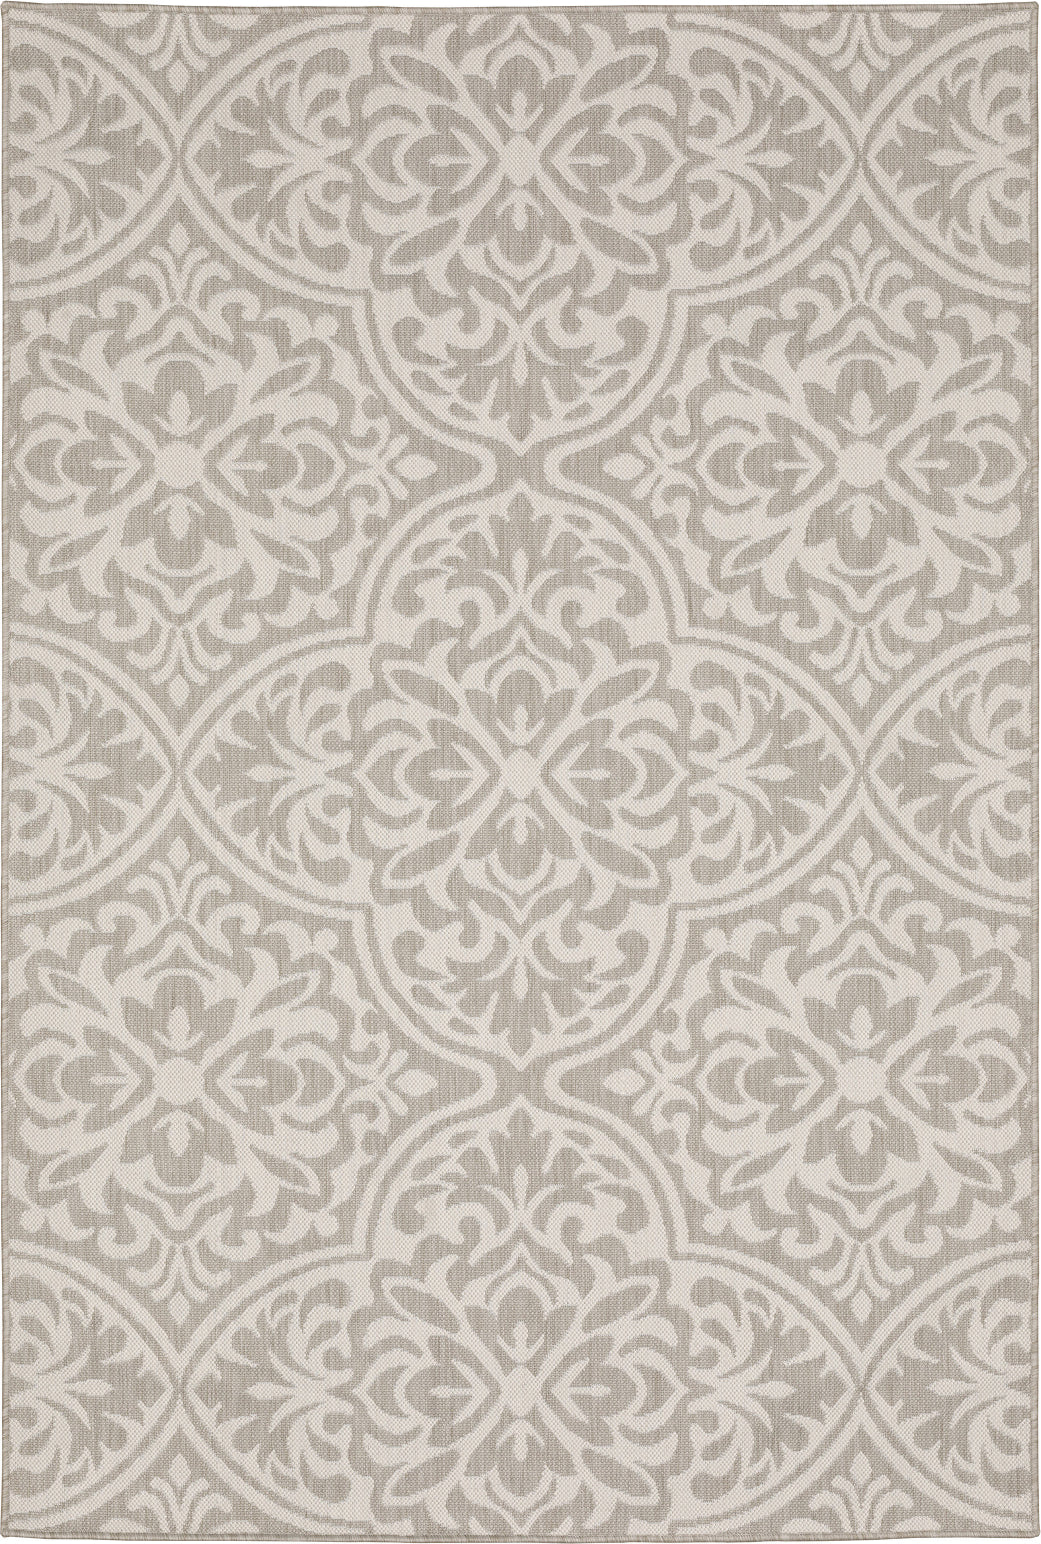 Oriental Weavers Portofino 1831H Grey/Ivory Area Rug main image featured